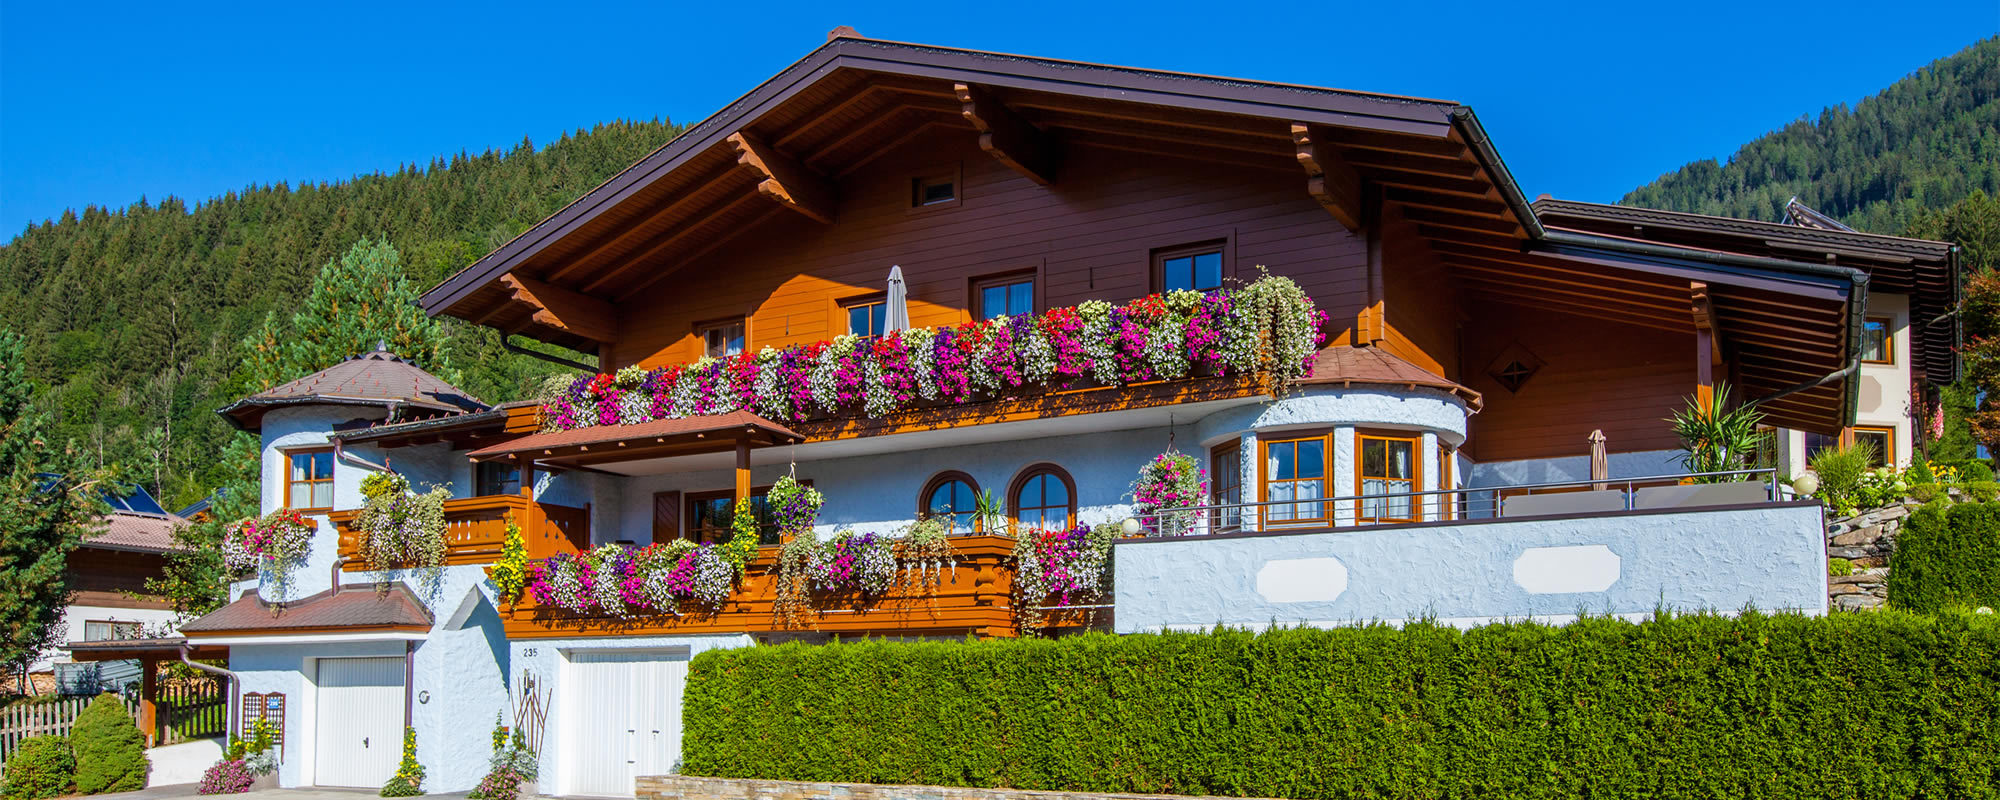 Sommerurlaub im Haus Teresa in Flachau © Flachau Tourismus | zooom productions